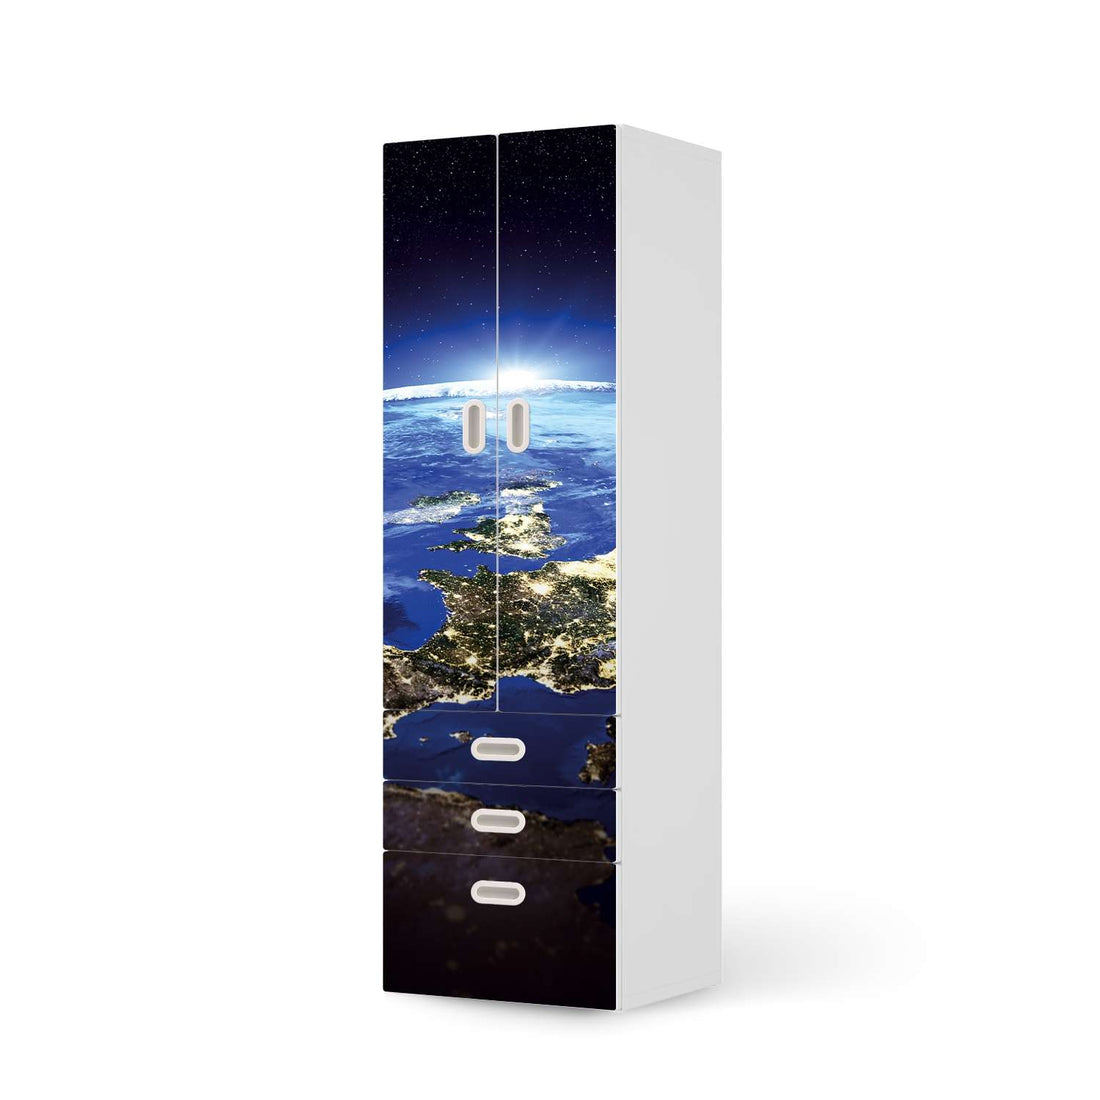 Klebefolie Earth View - IKEA Stuva / Fritids kombiniert - 3 Schubladen und 2 große Türen  - weiss